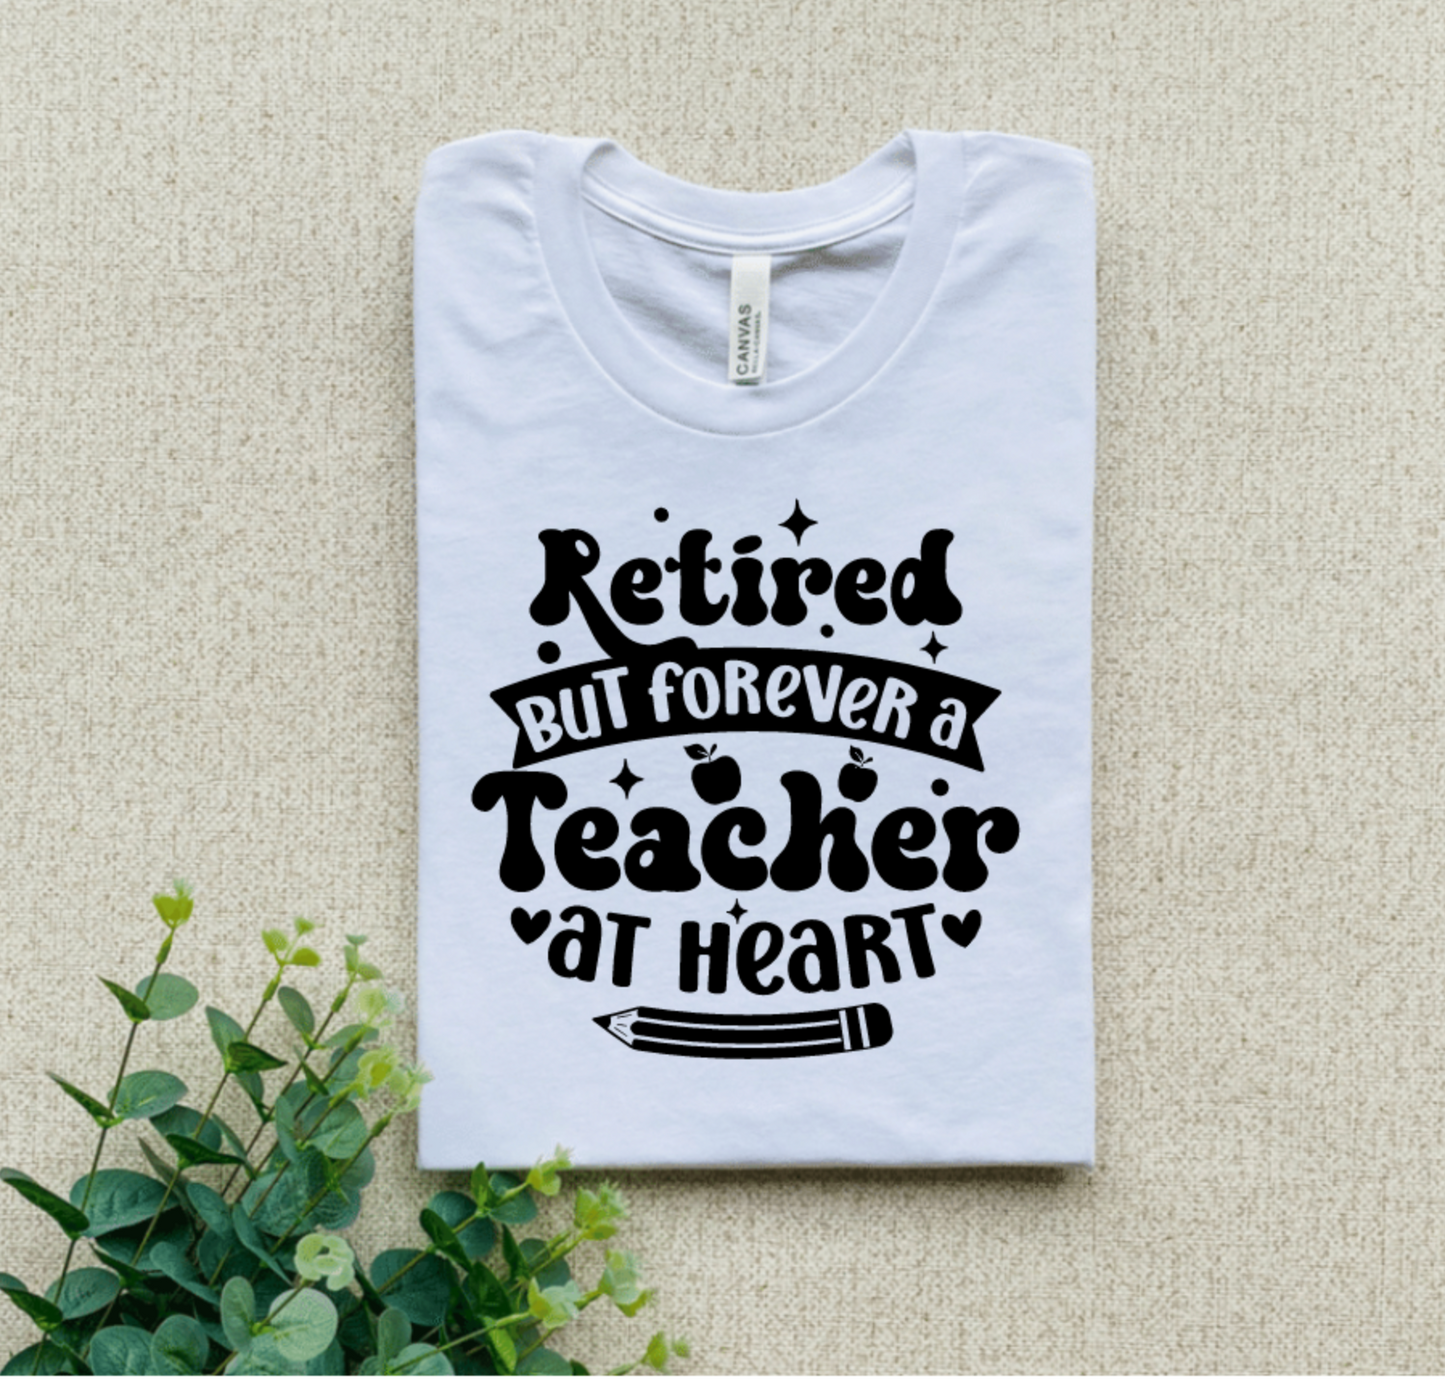 RETIRED BUT FOREVER A TEACHER AT HEART